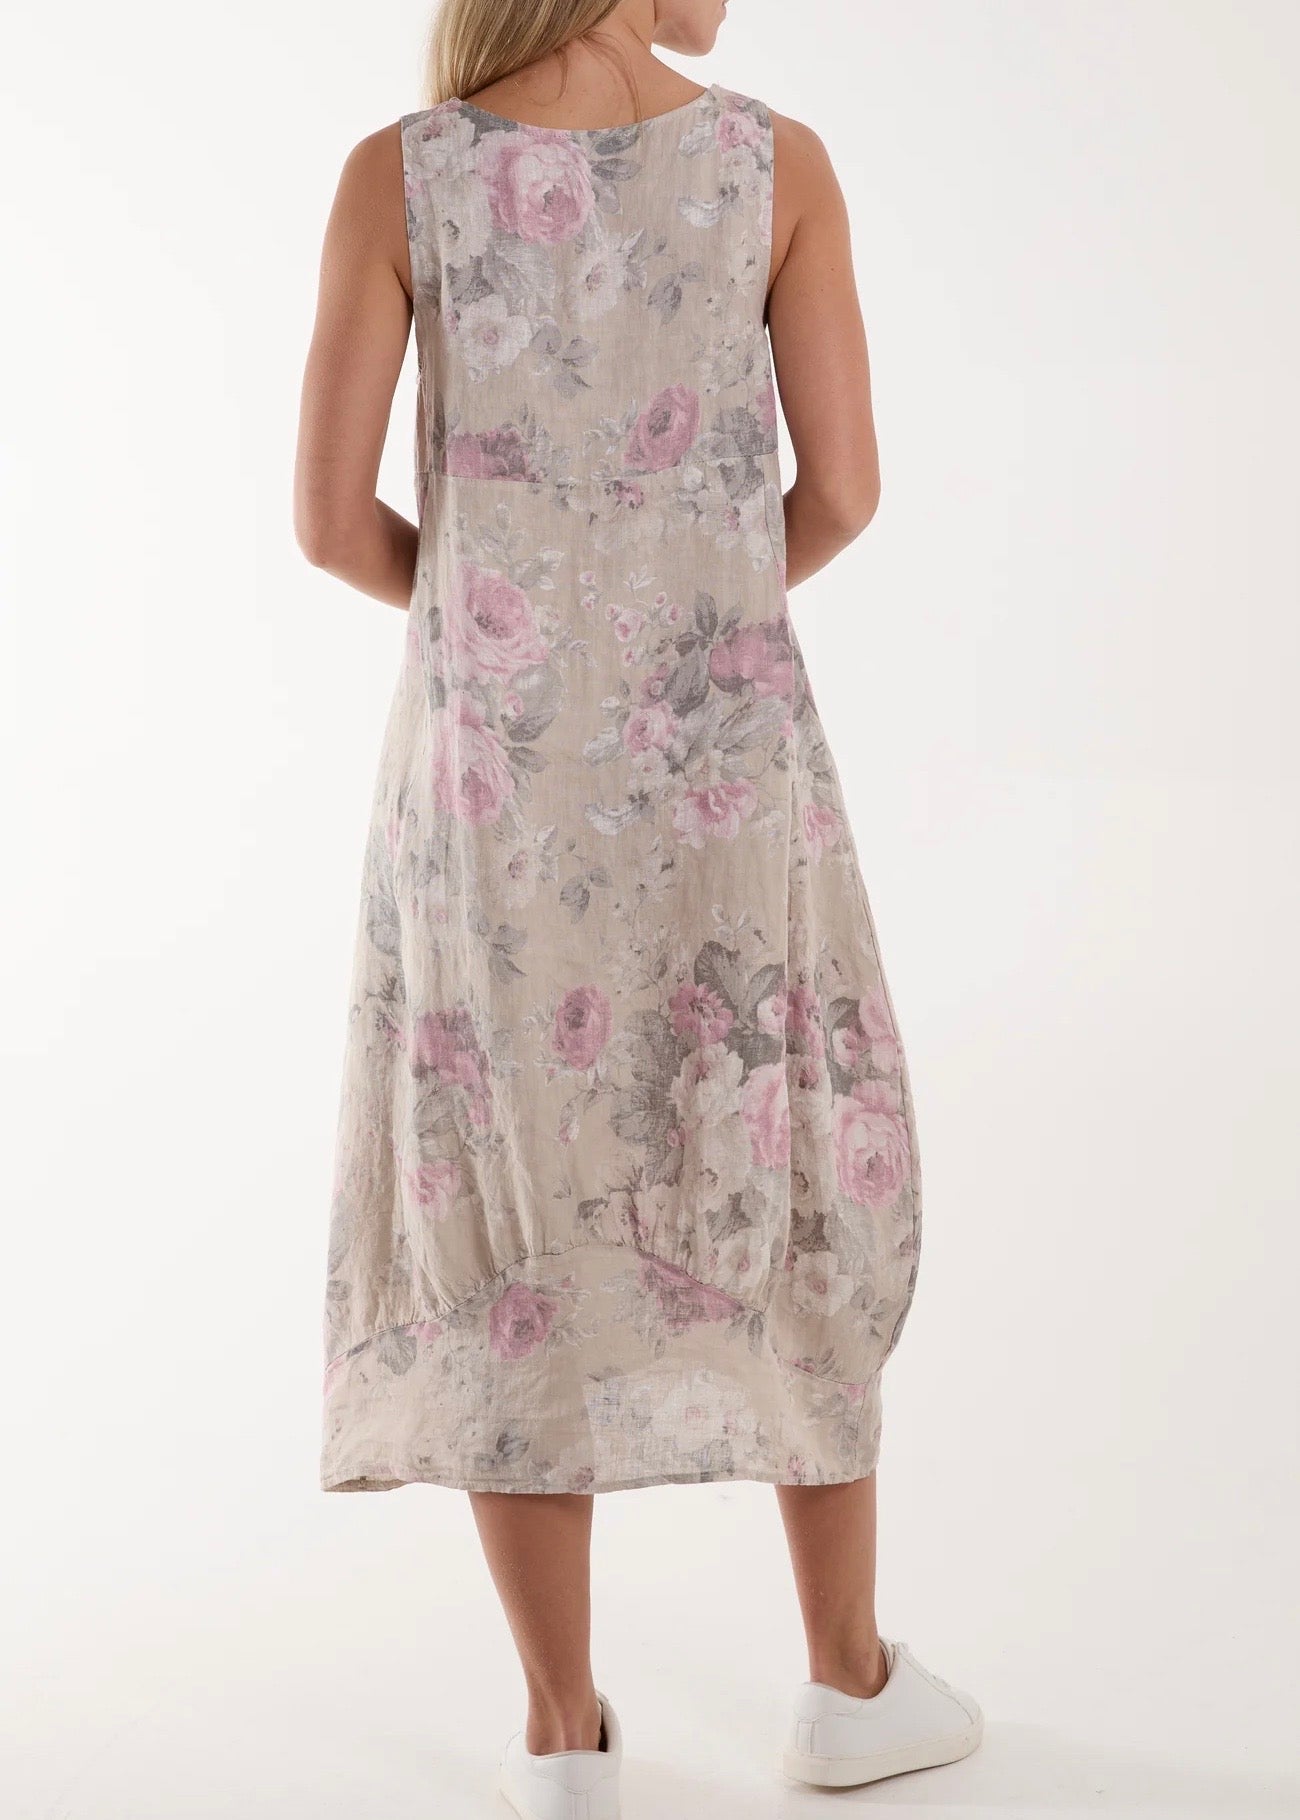 Sands - Linen Roses Tunic Dress / Beige